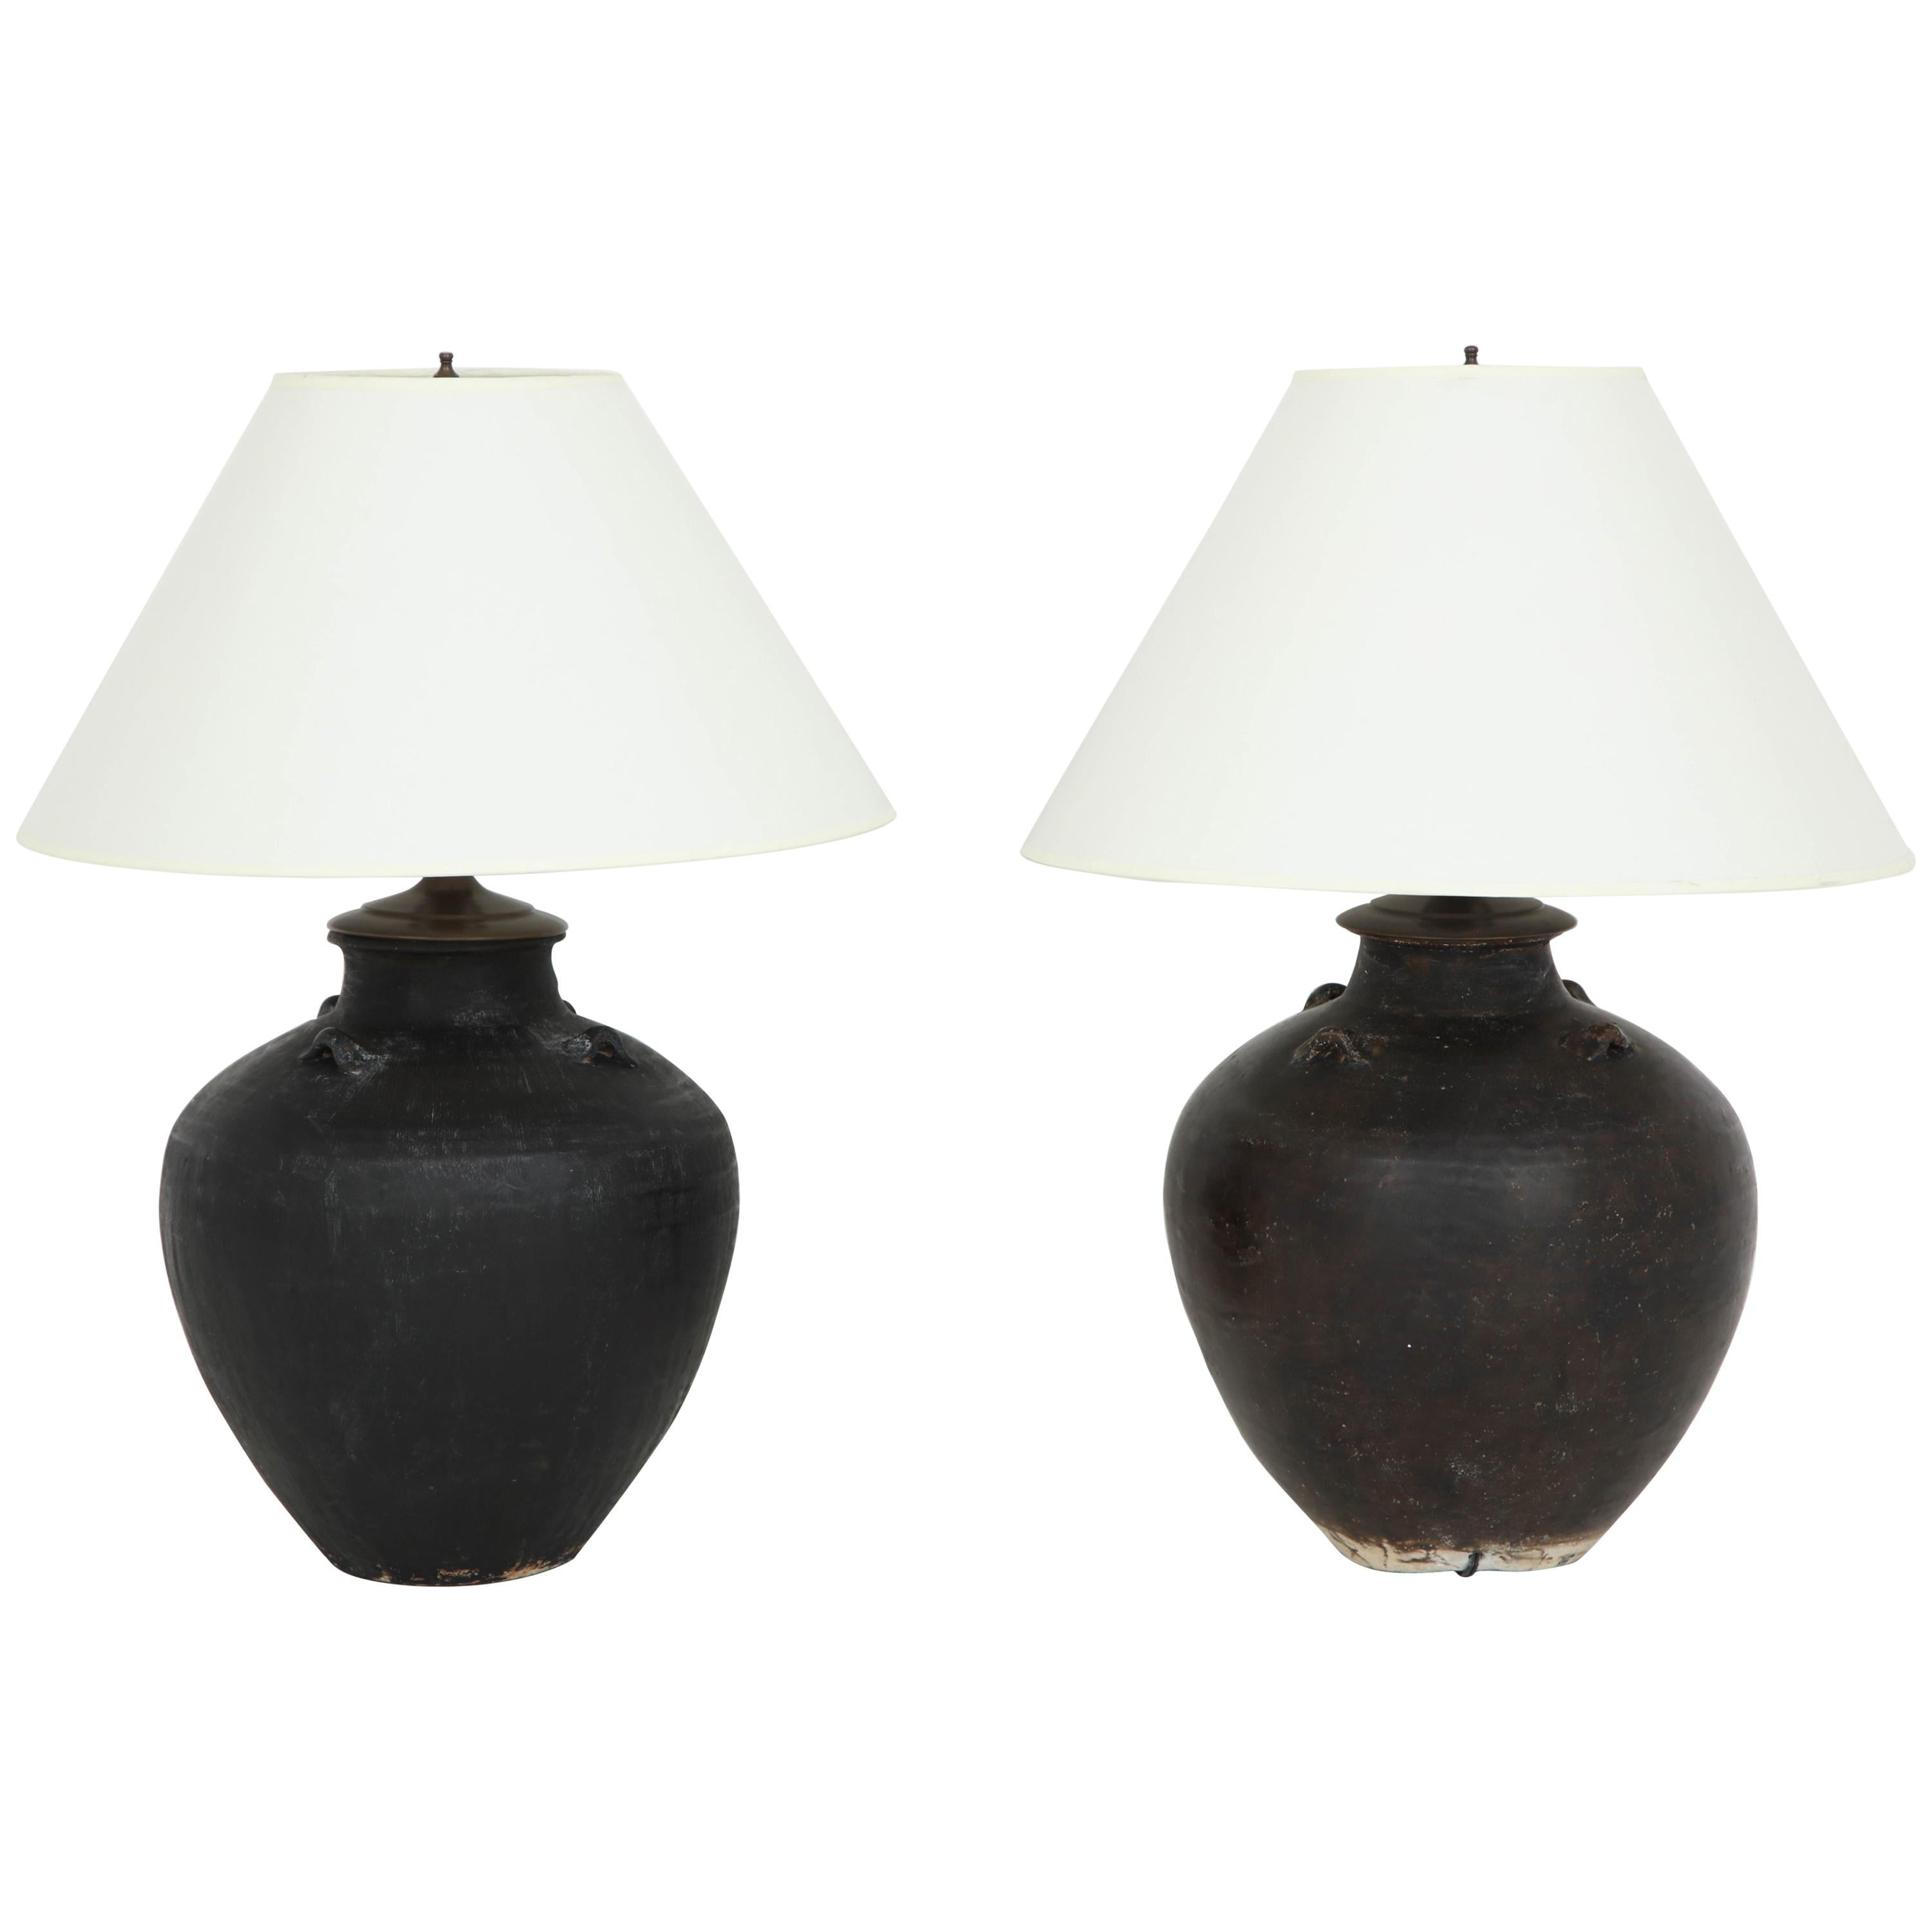 Pair of Black Terracotta Wine Vessel Lamps